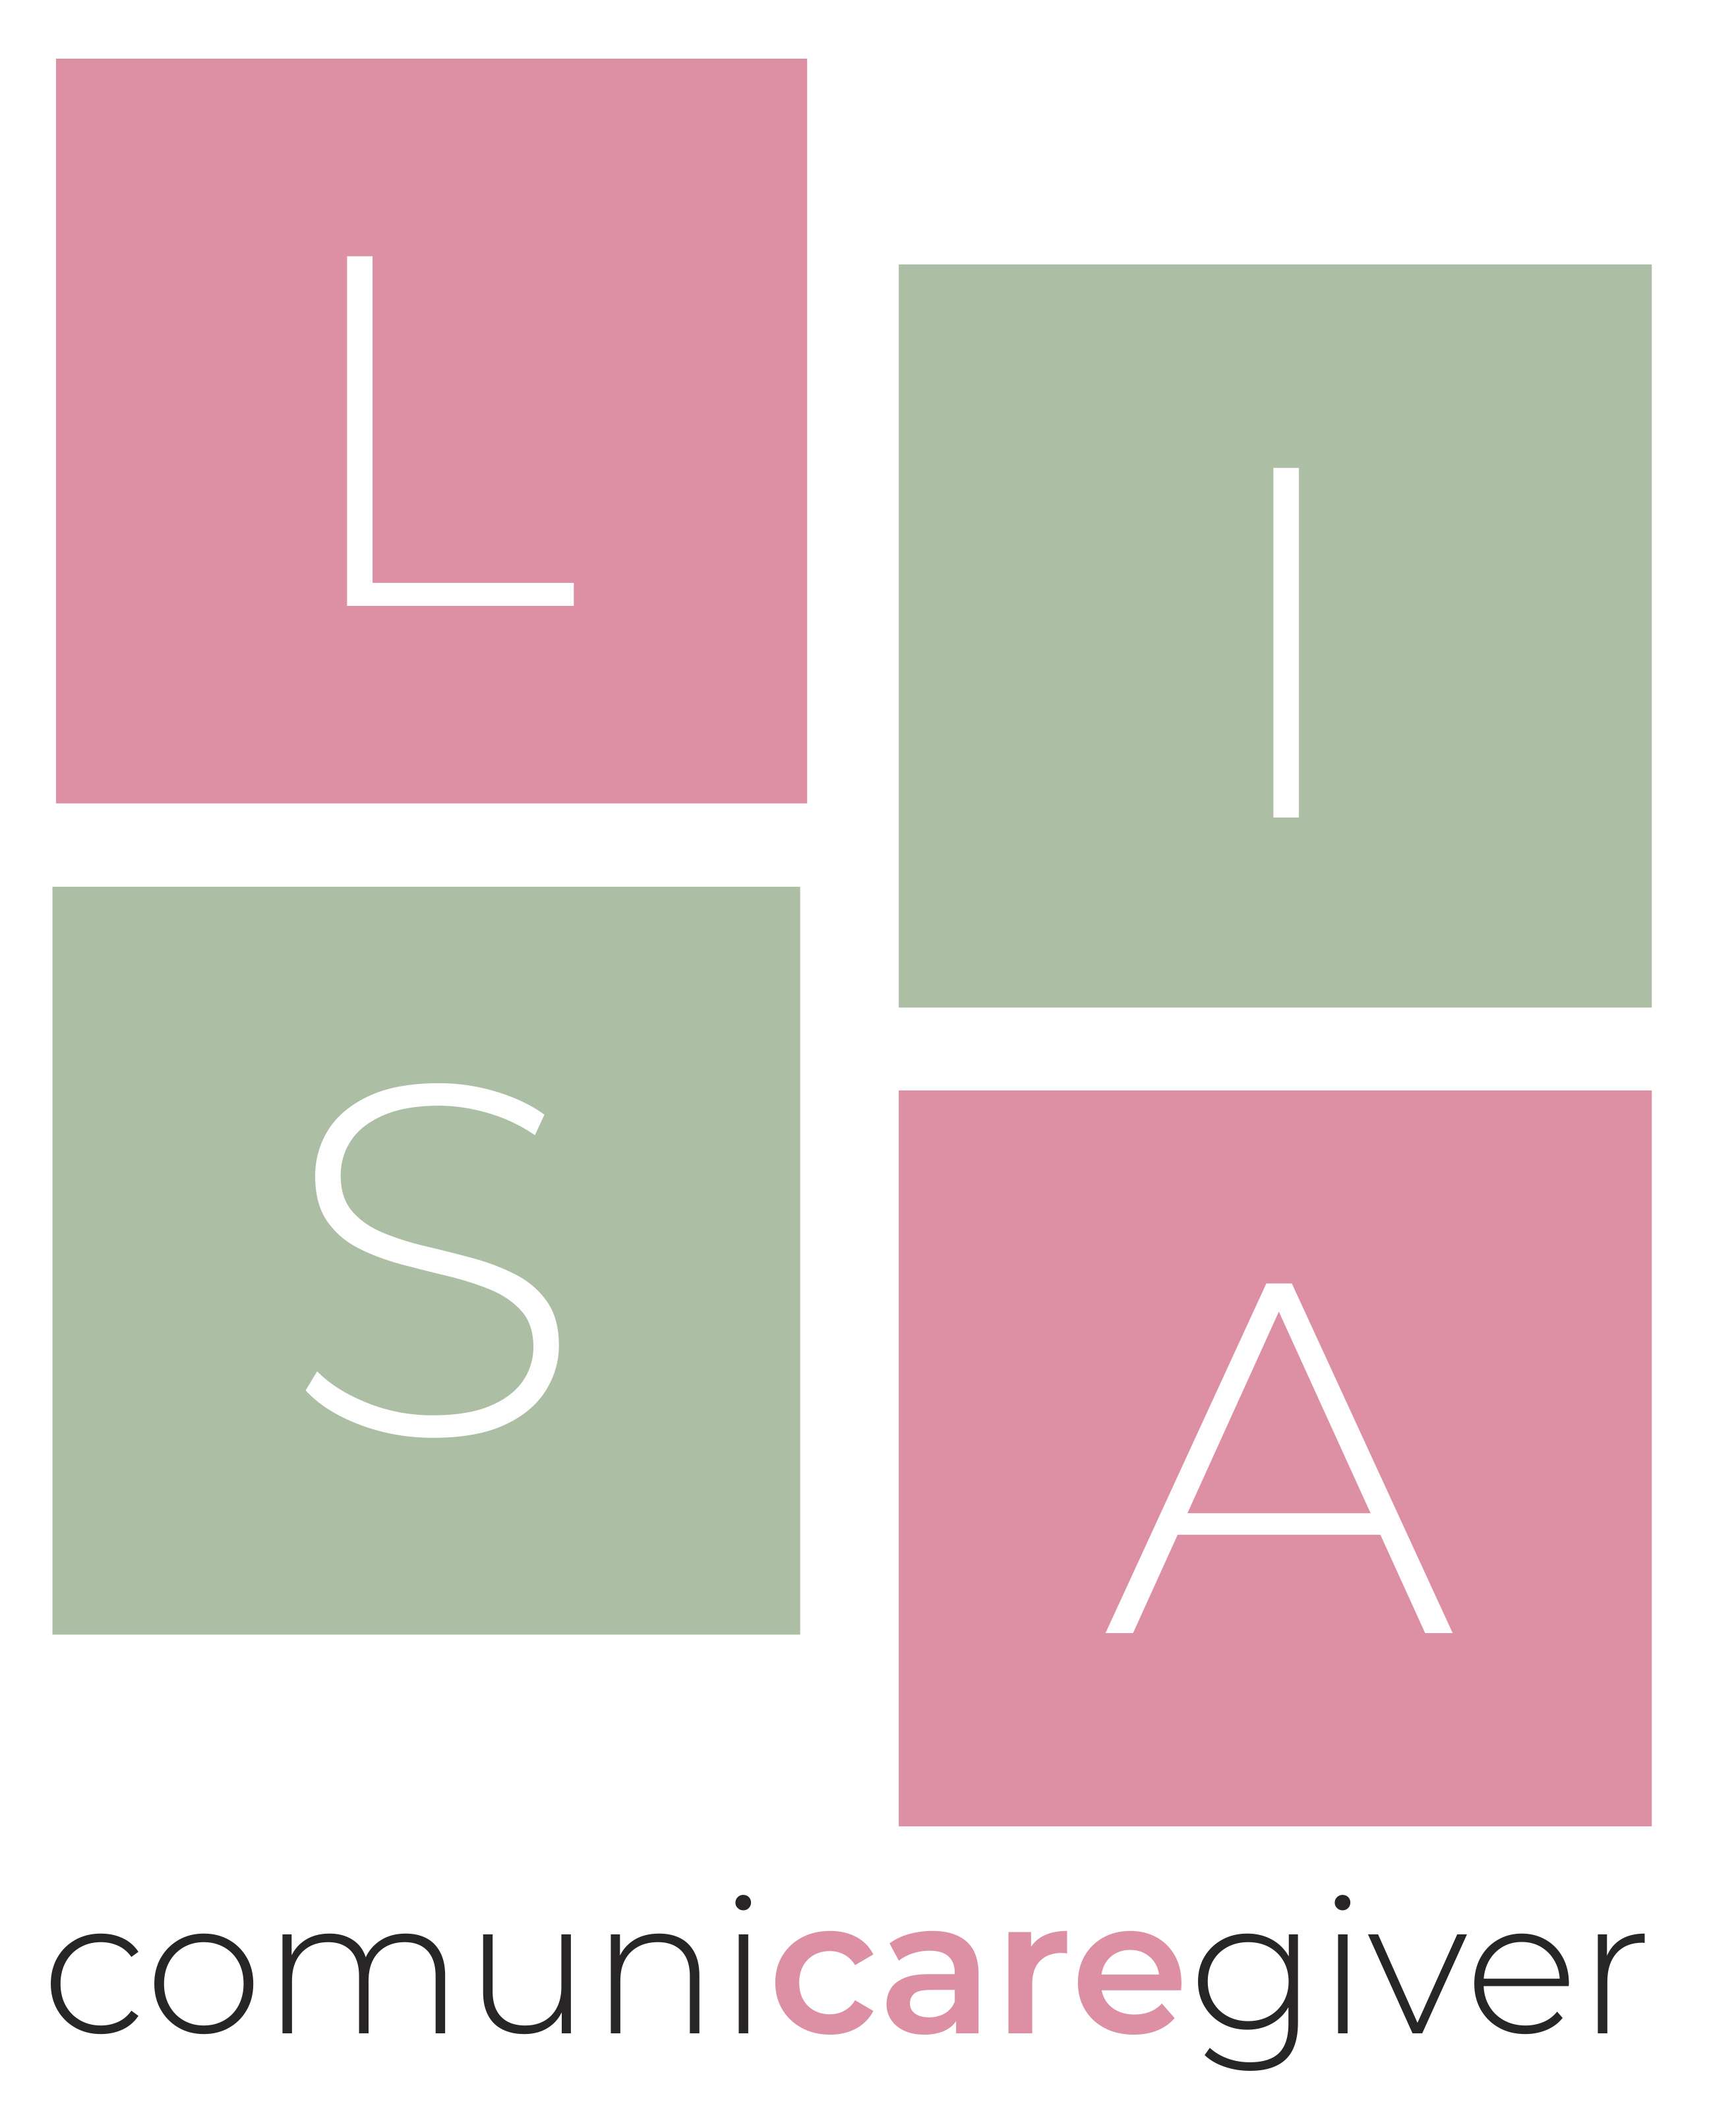 Lisa-comunicaregive